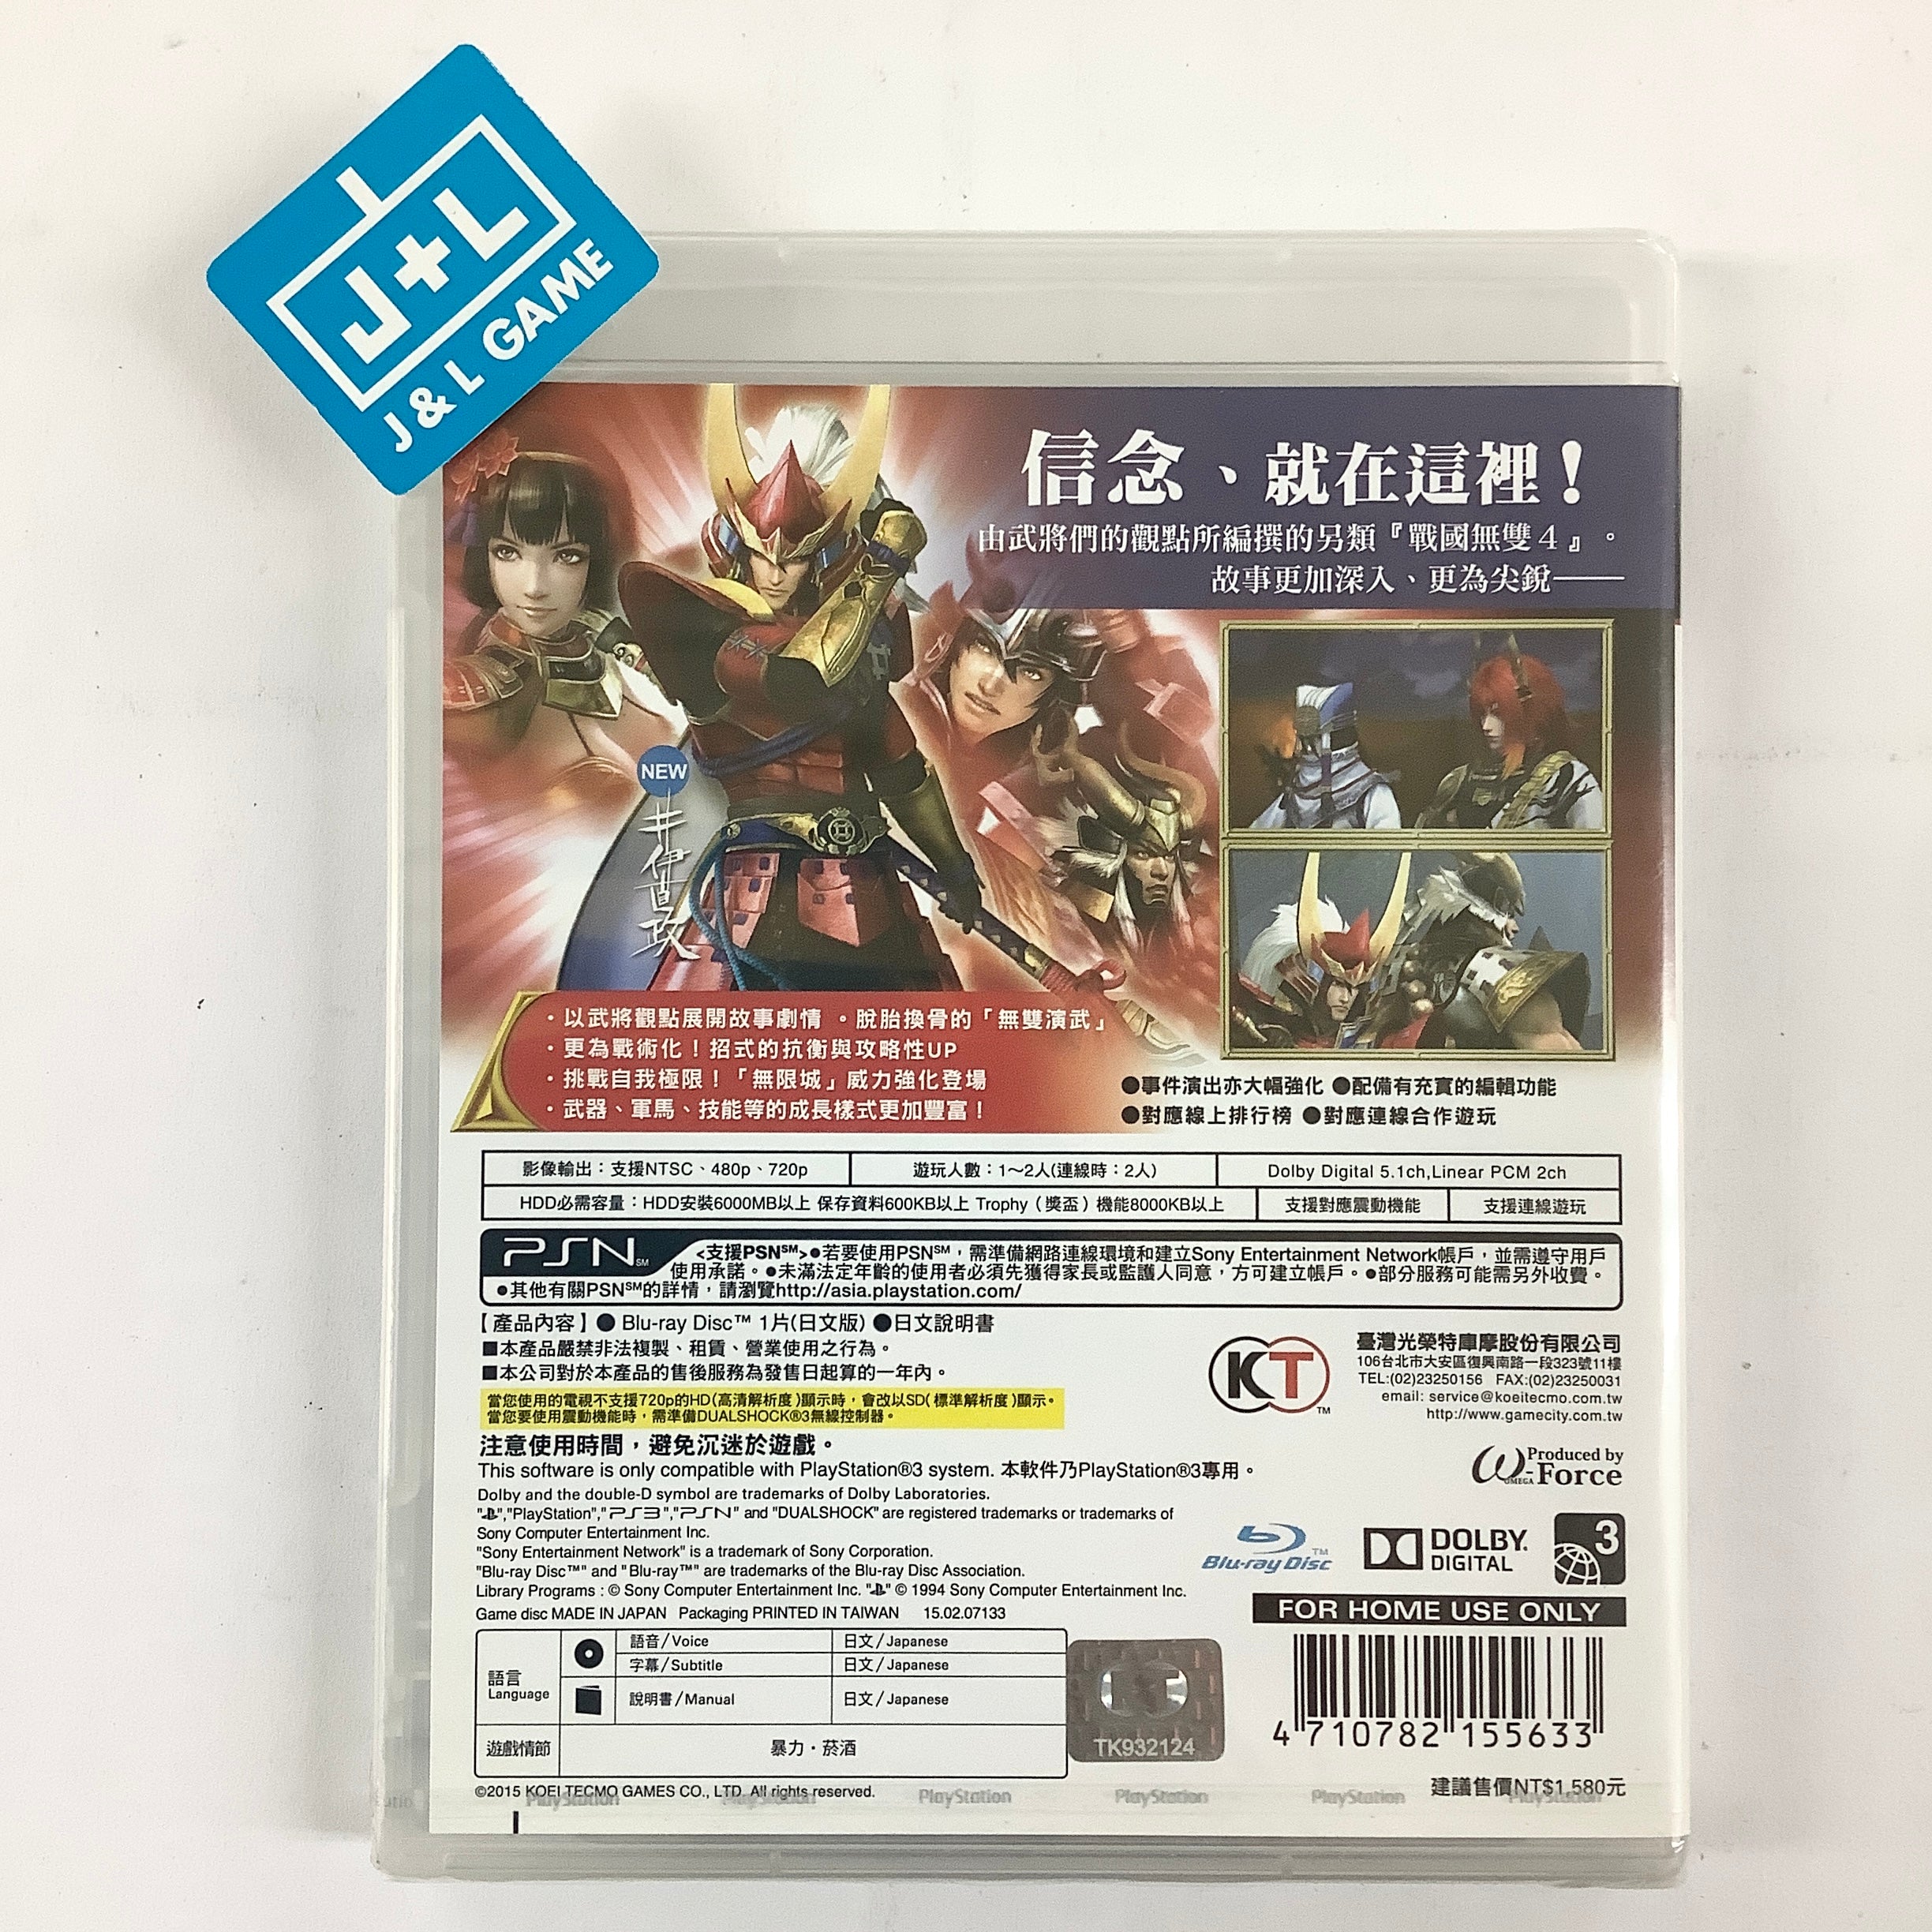 Sengoku Musou 4-II - (PS3) PlayStation 3 (Asia Import) Video Games Koei Tecmo Games   